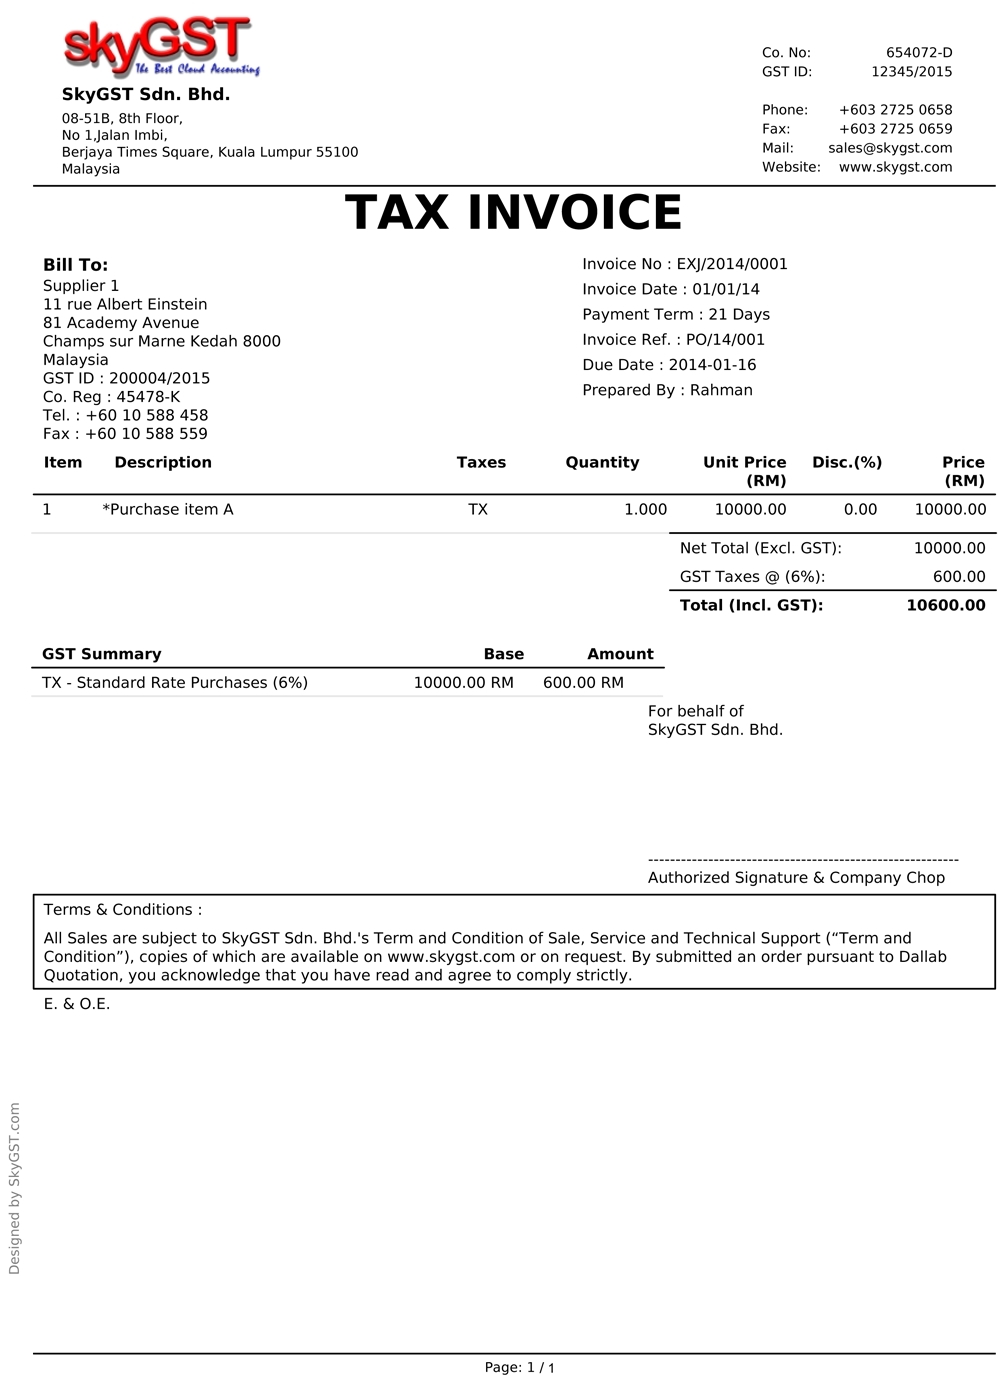 basic tax invoice template free australian tax invoice template basic tax invoice template